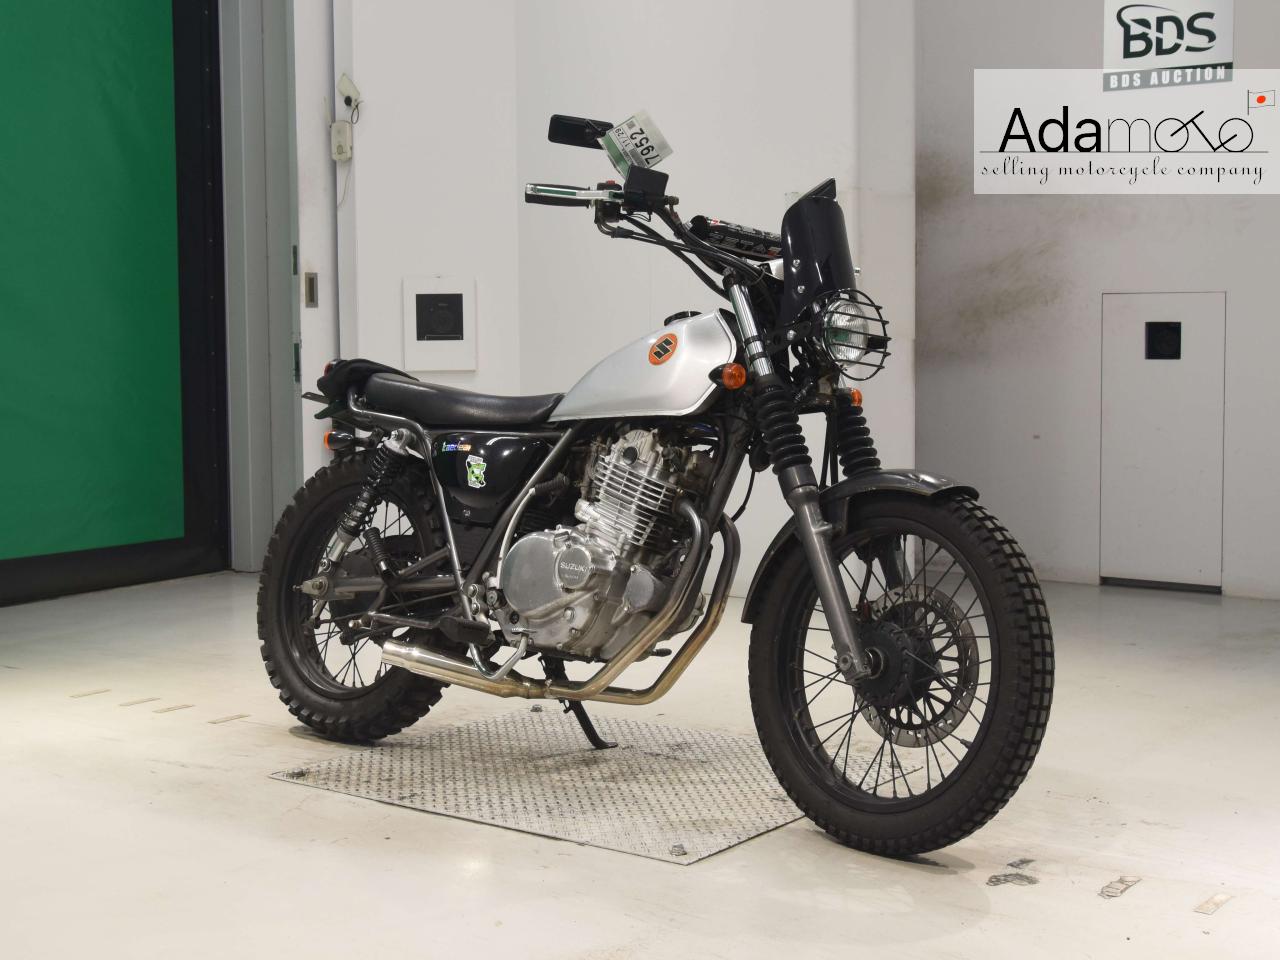 Suzuki GRASSTRACKER - Adamoto - Motorcycles from Japan